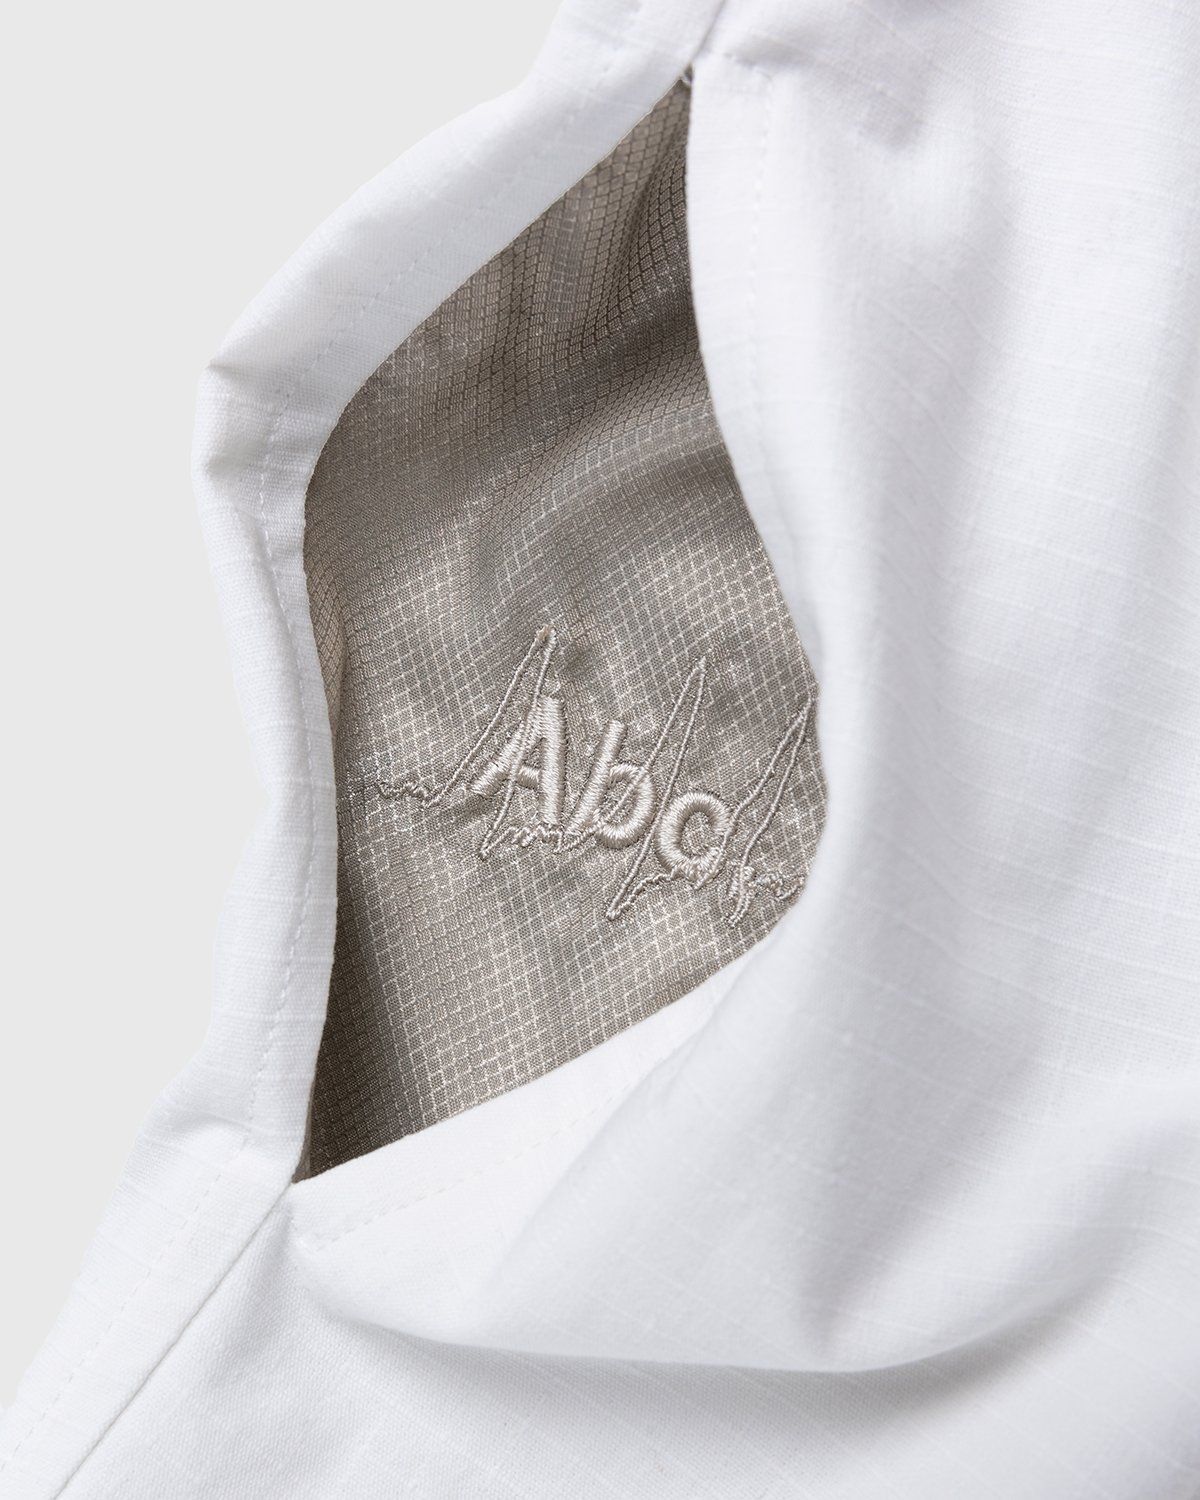 Abc. – Studio Work Pant Selenite - Work Pants - White - Image 7